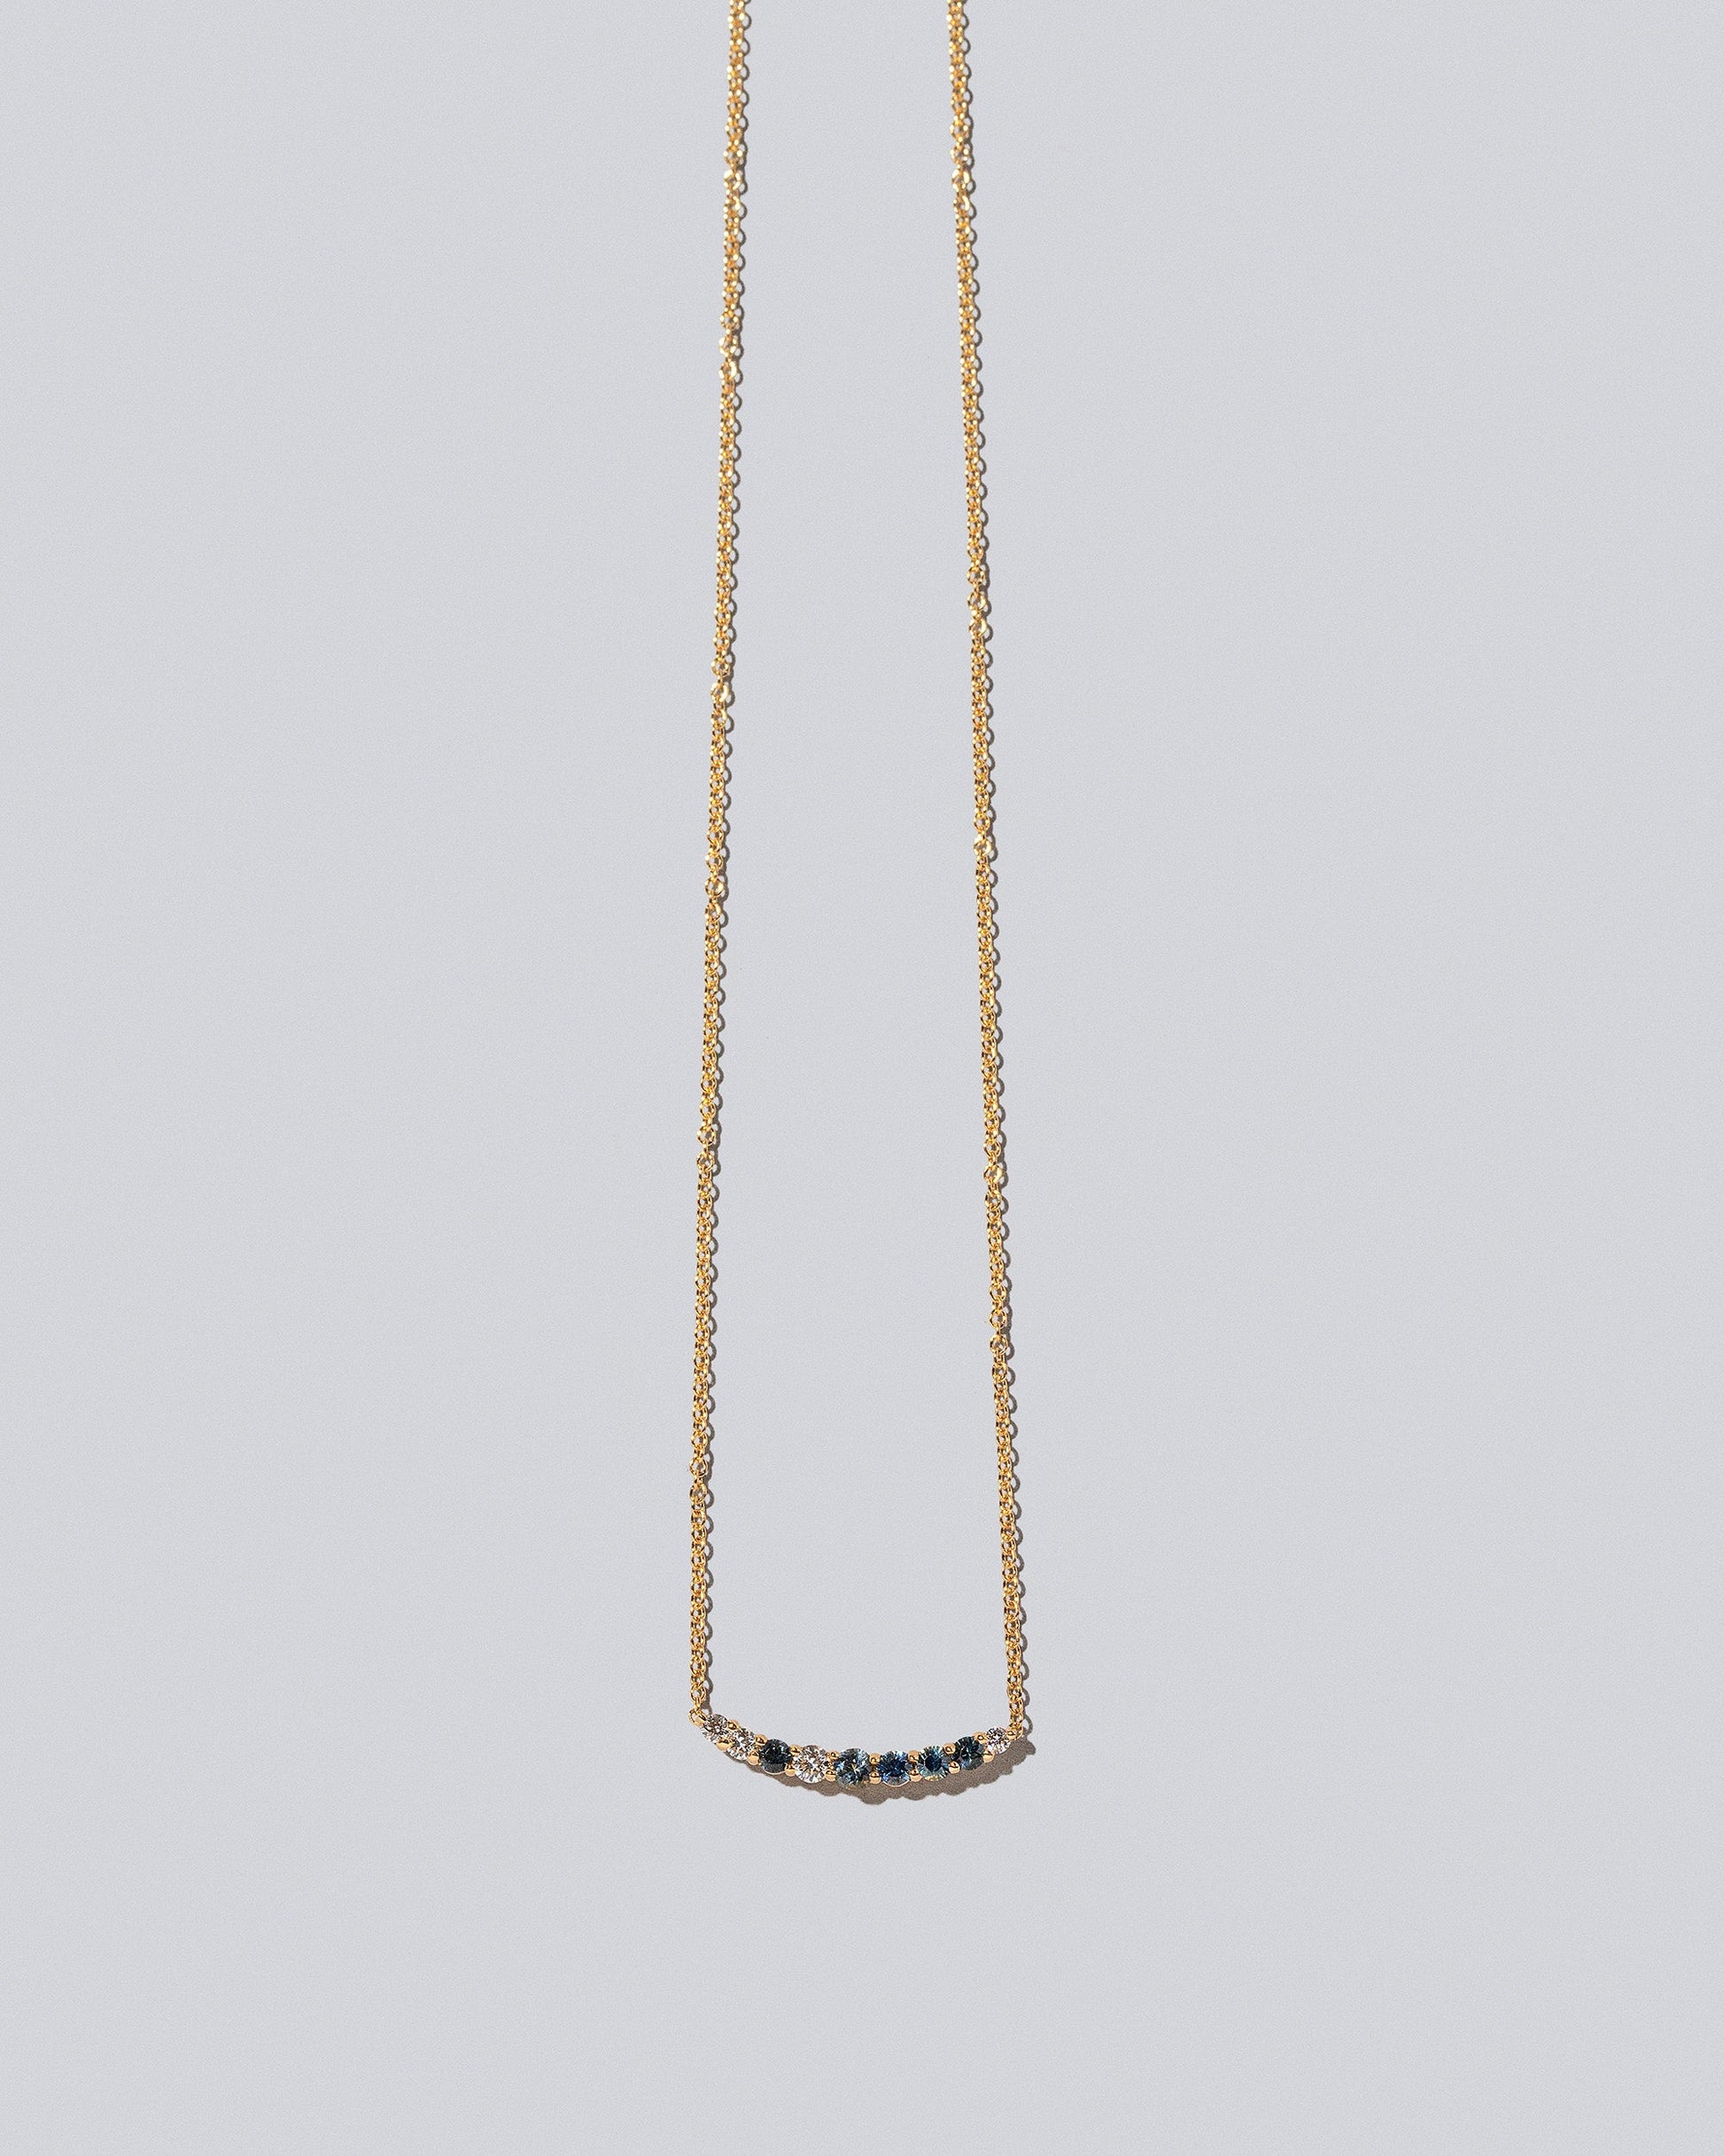 Sapphire & White Diamond Crescent Necklace on light color background.